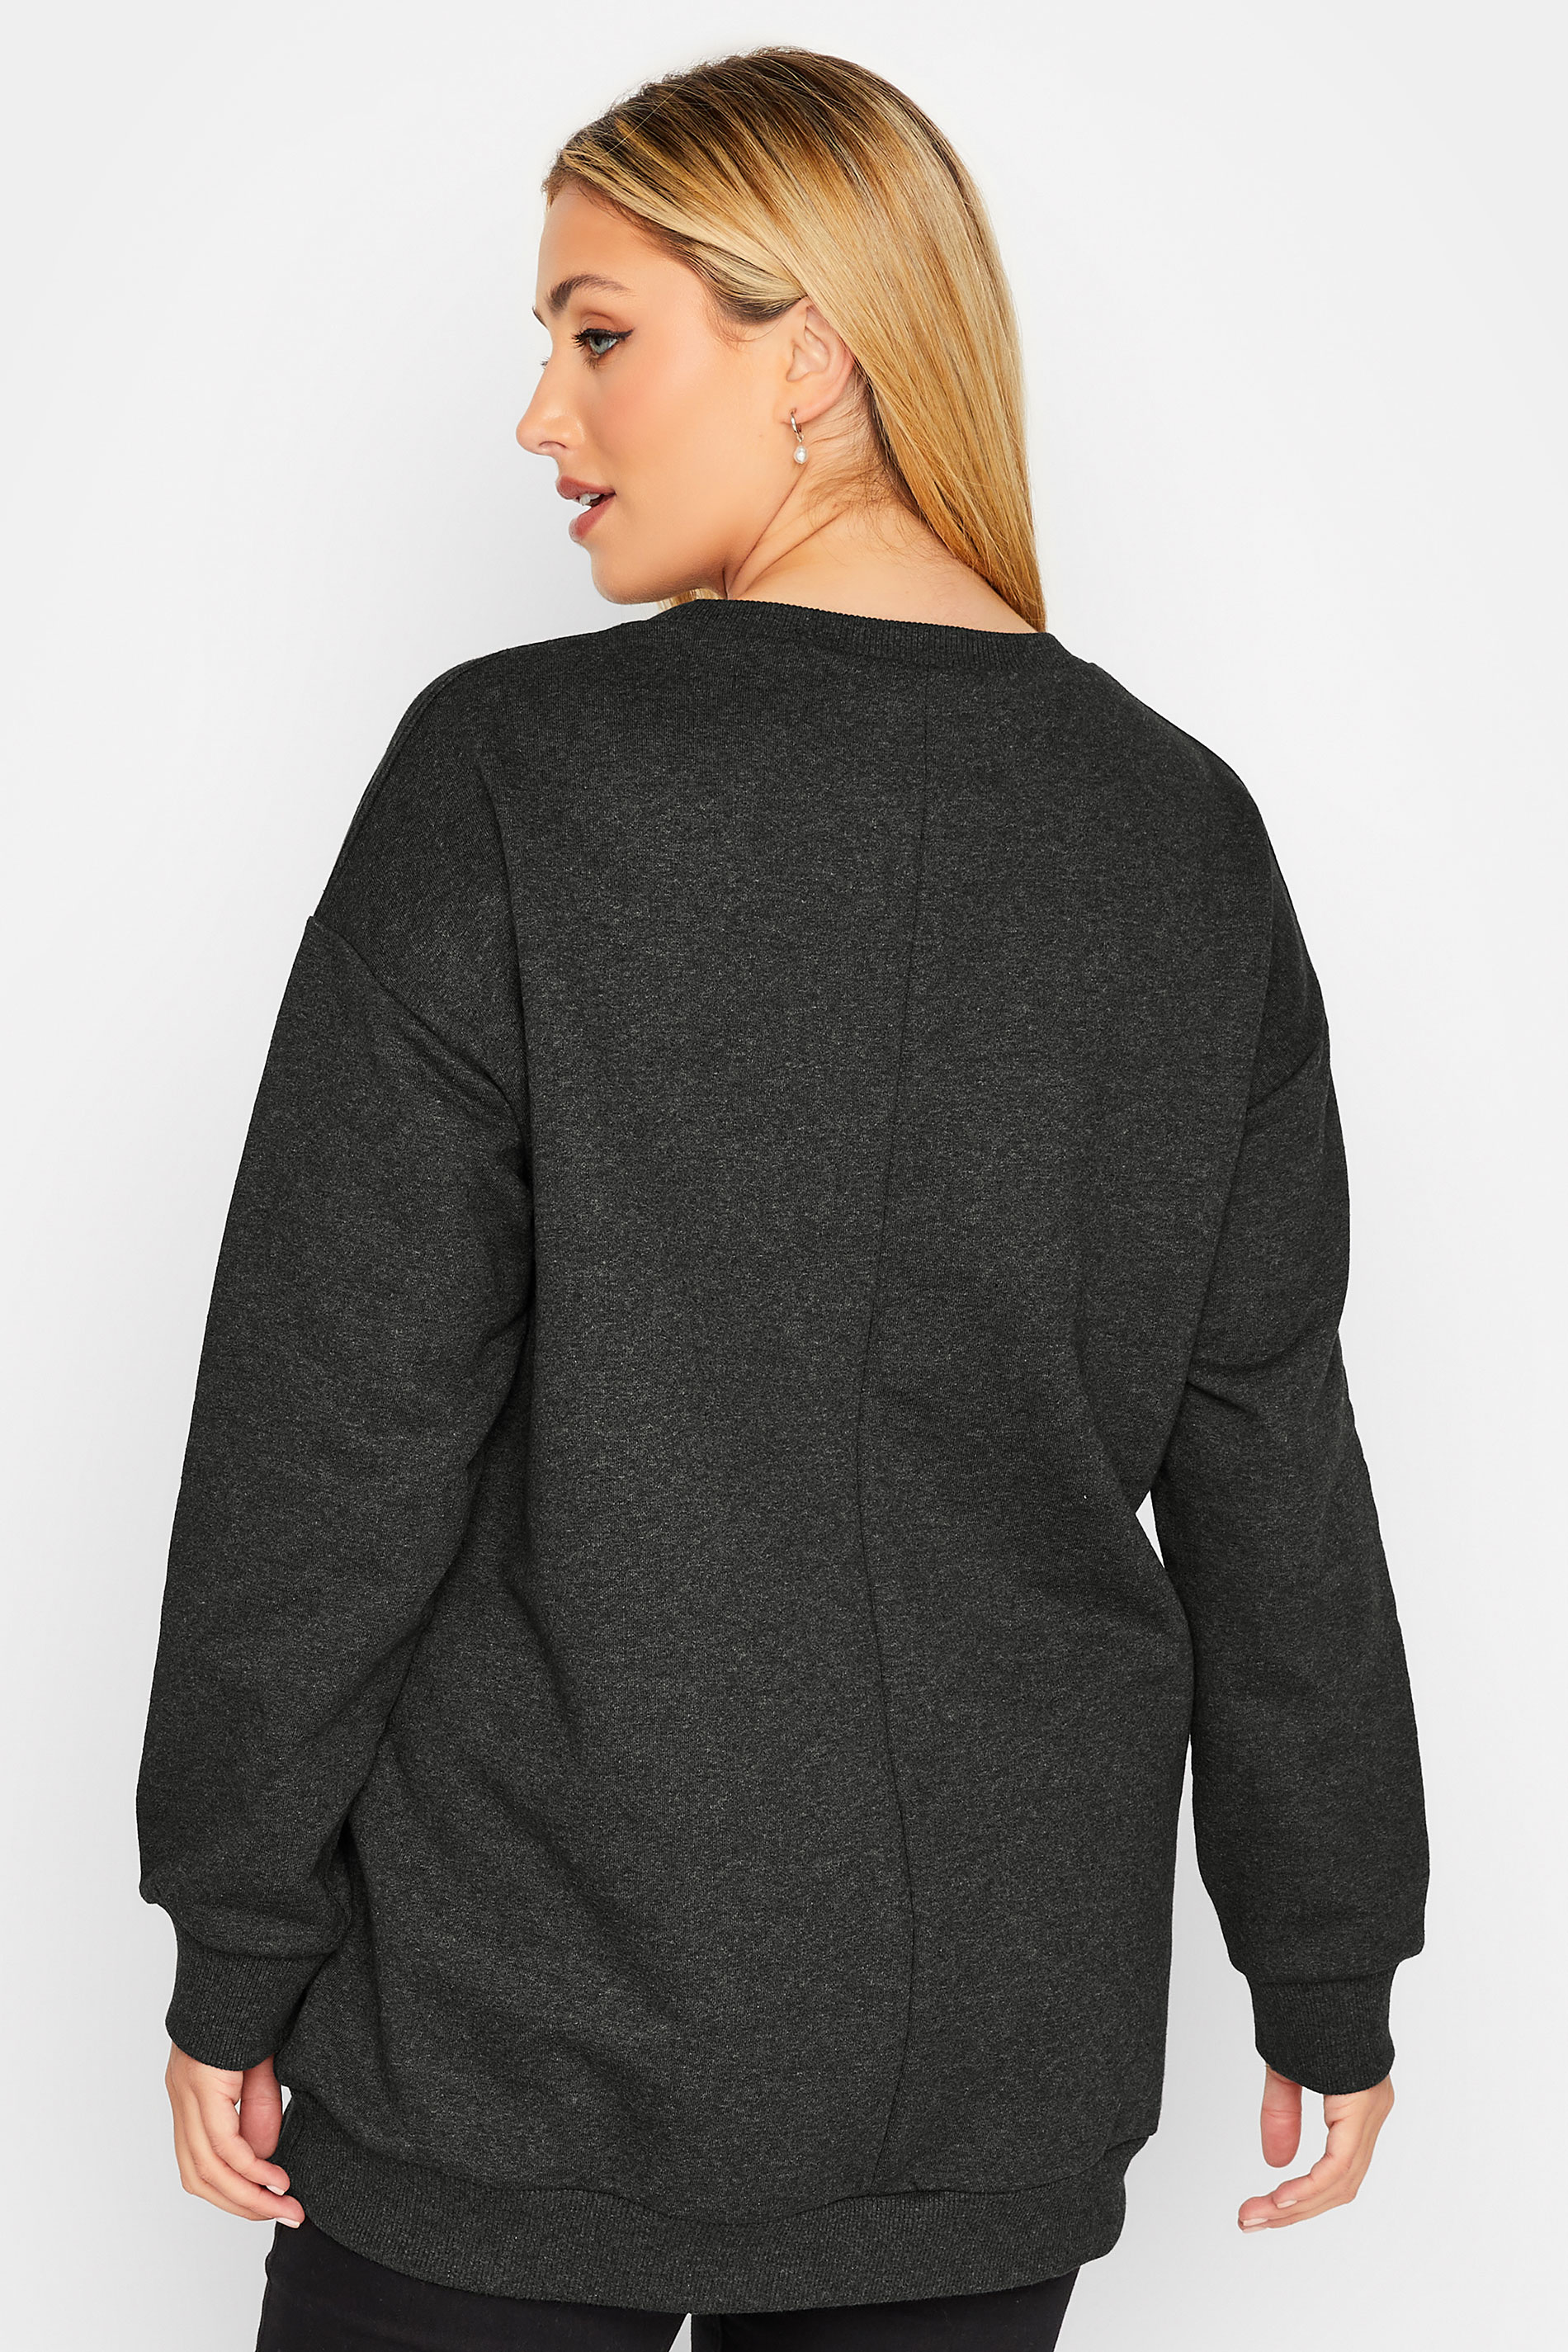 YOURS LUXURY Plus Size Charcoal Grey 'Paris' Diamante Embellished Sweatshirt | Yours Clothing 3